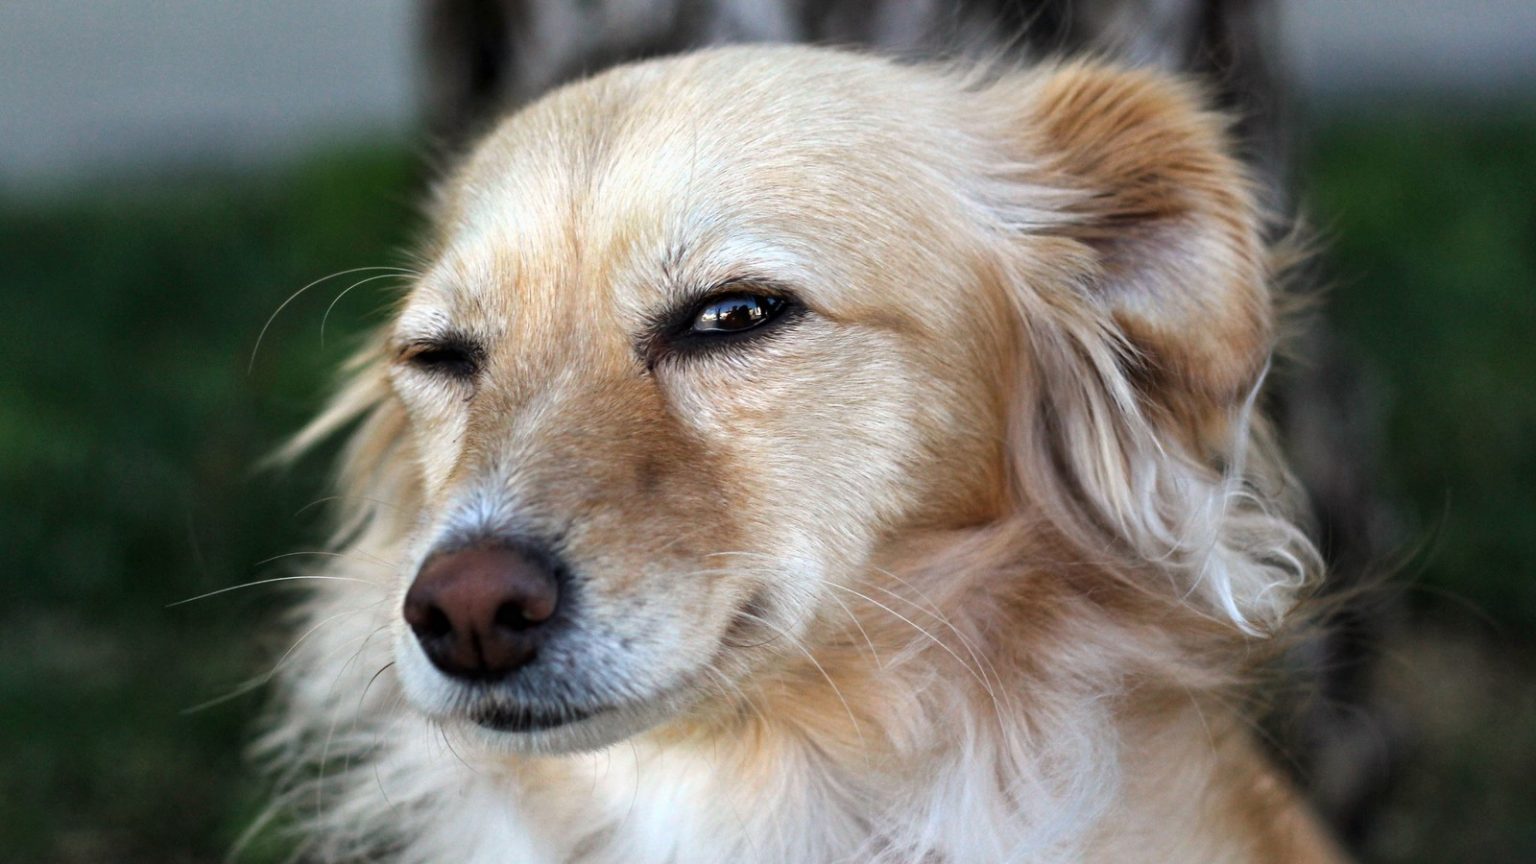 4 Gründe Darum zwinkern Hunde wirklich! KUKKSI Star News, Beauty